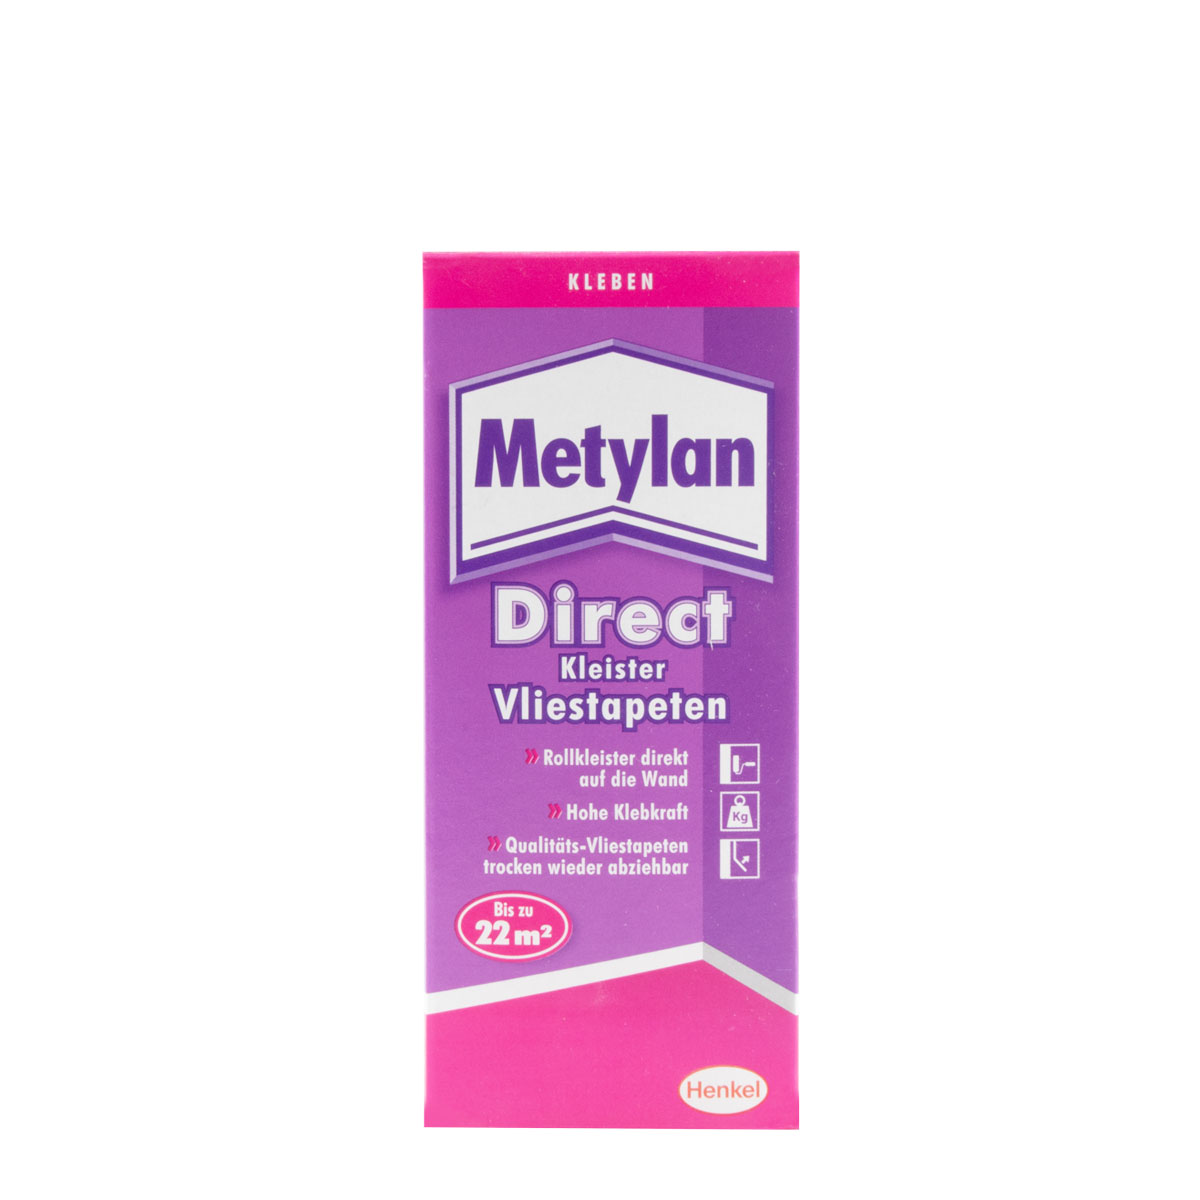 Metylan Direct Kleister Vliestapeten 200g MDD20